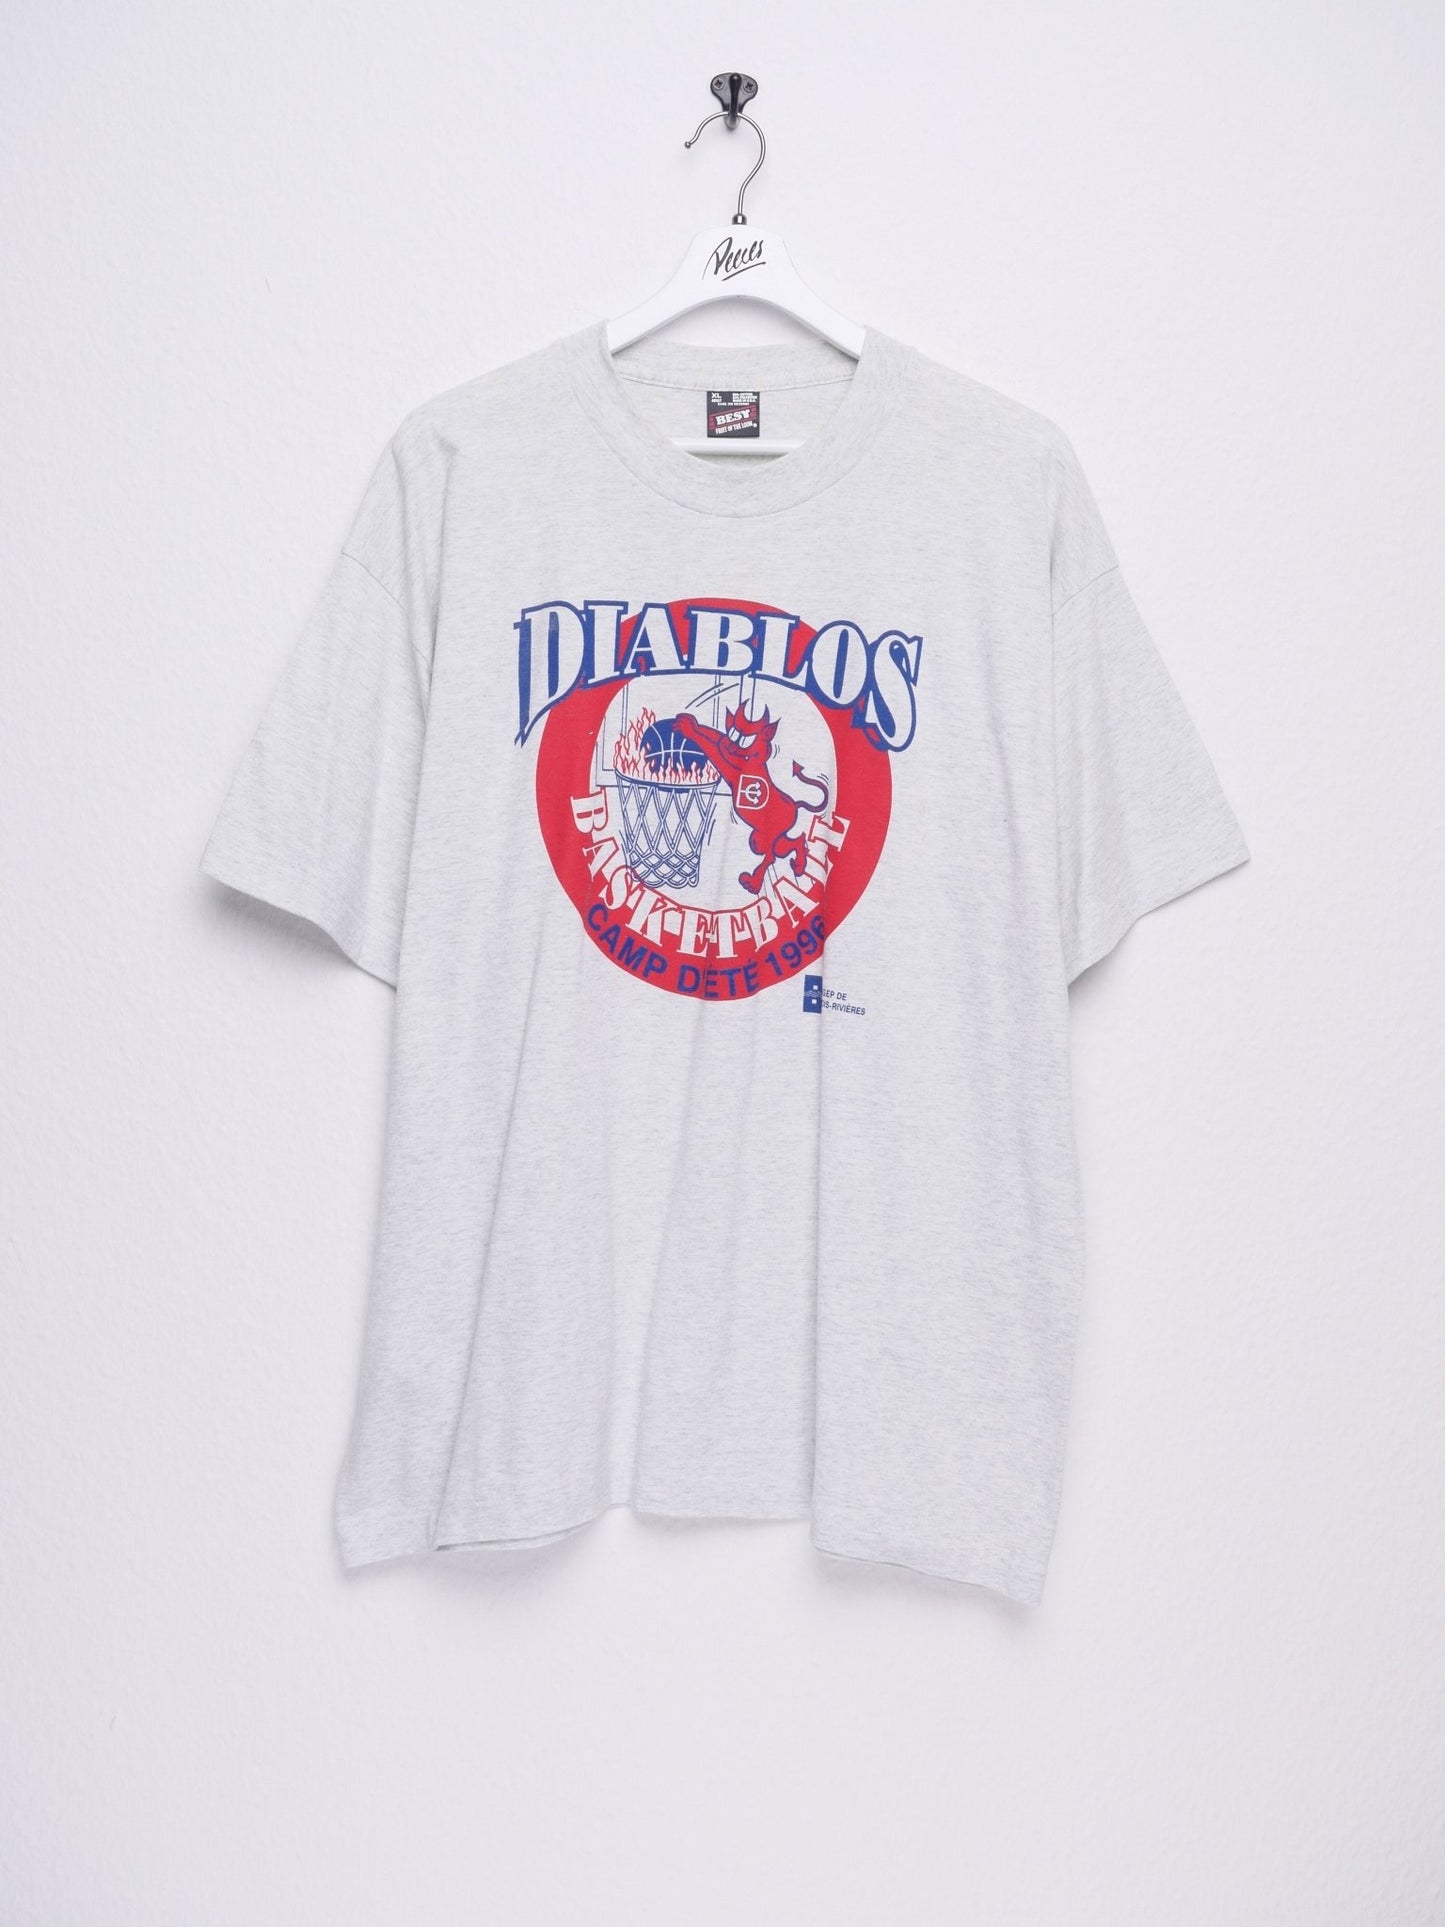 Diablos Basketball Camp diet 1996 printed Logo Vintage Shirt - Peeces